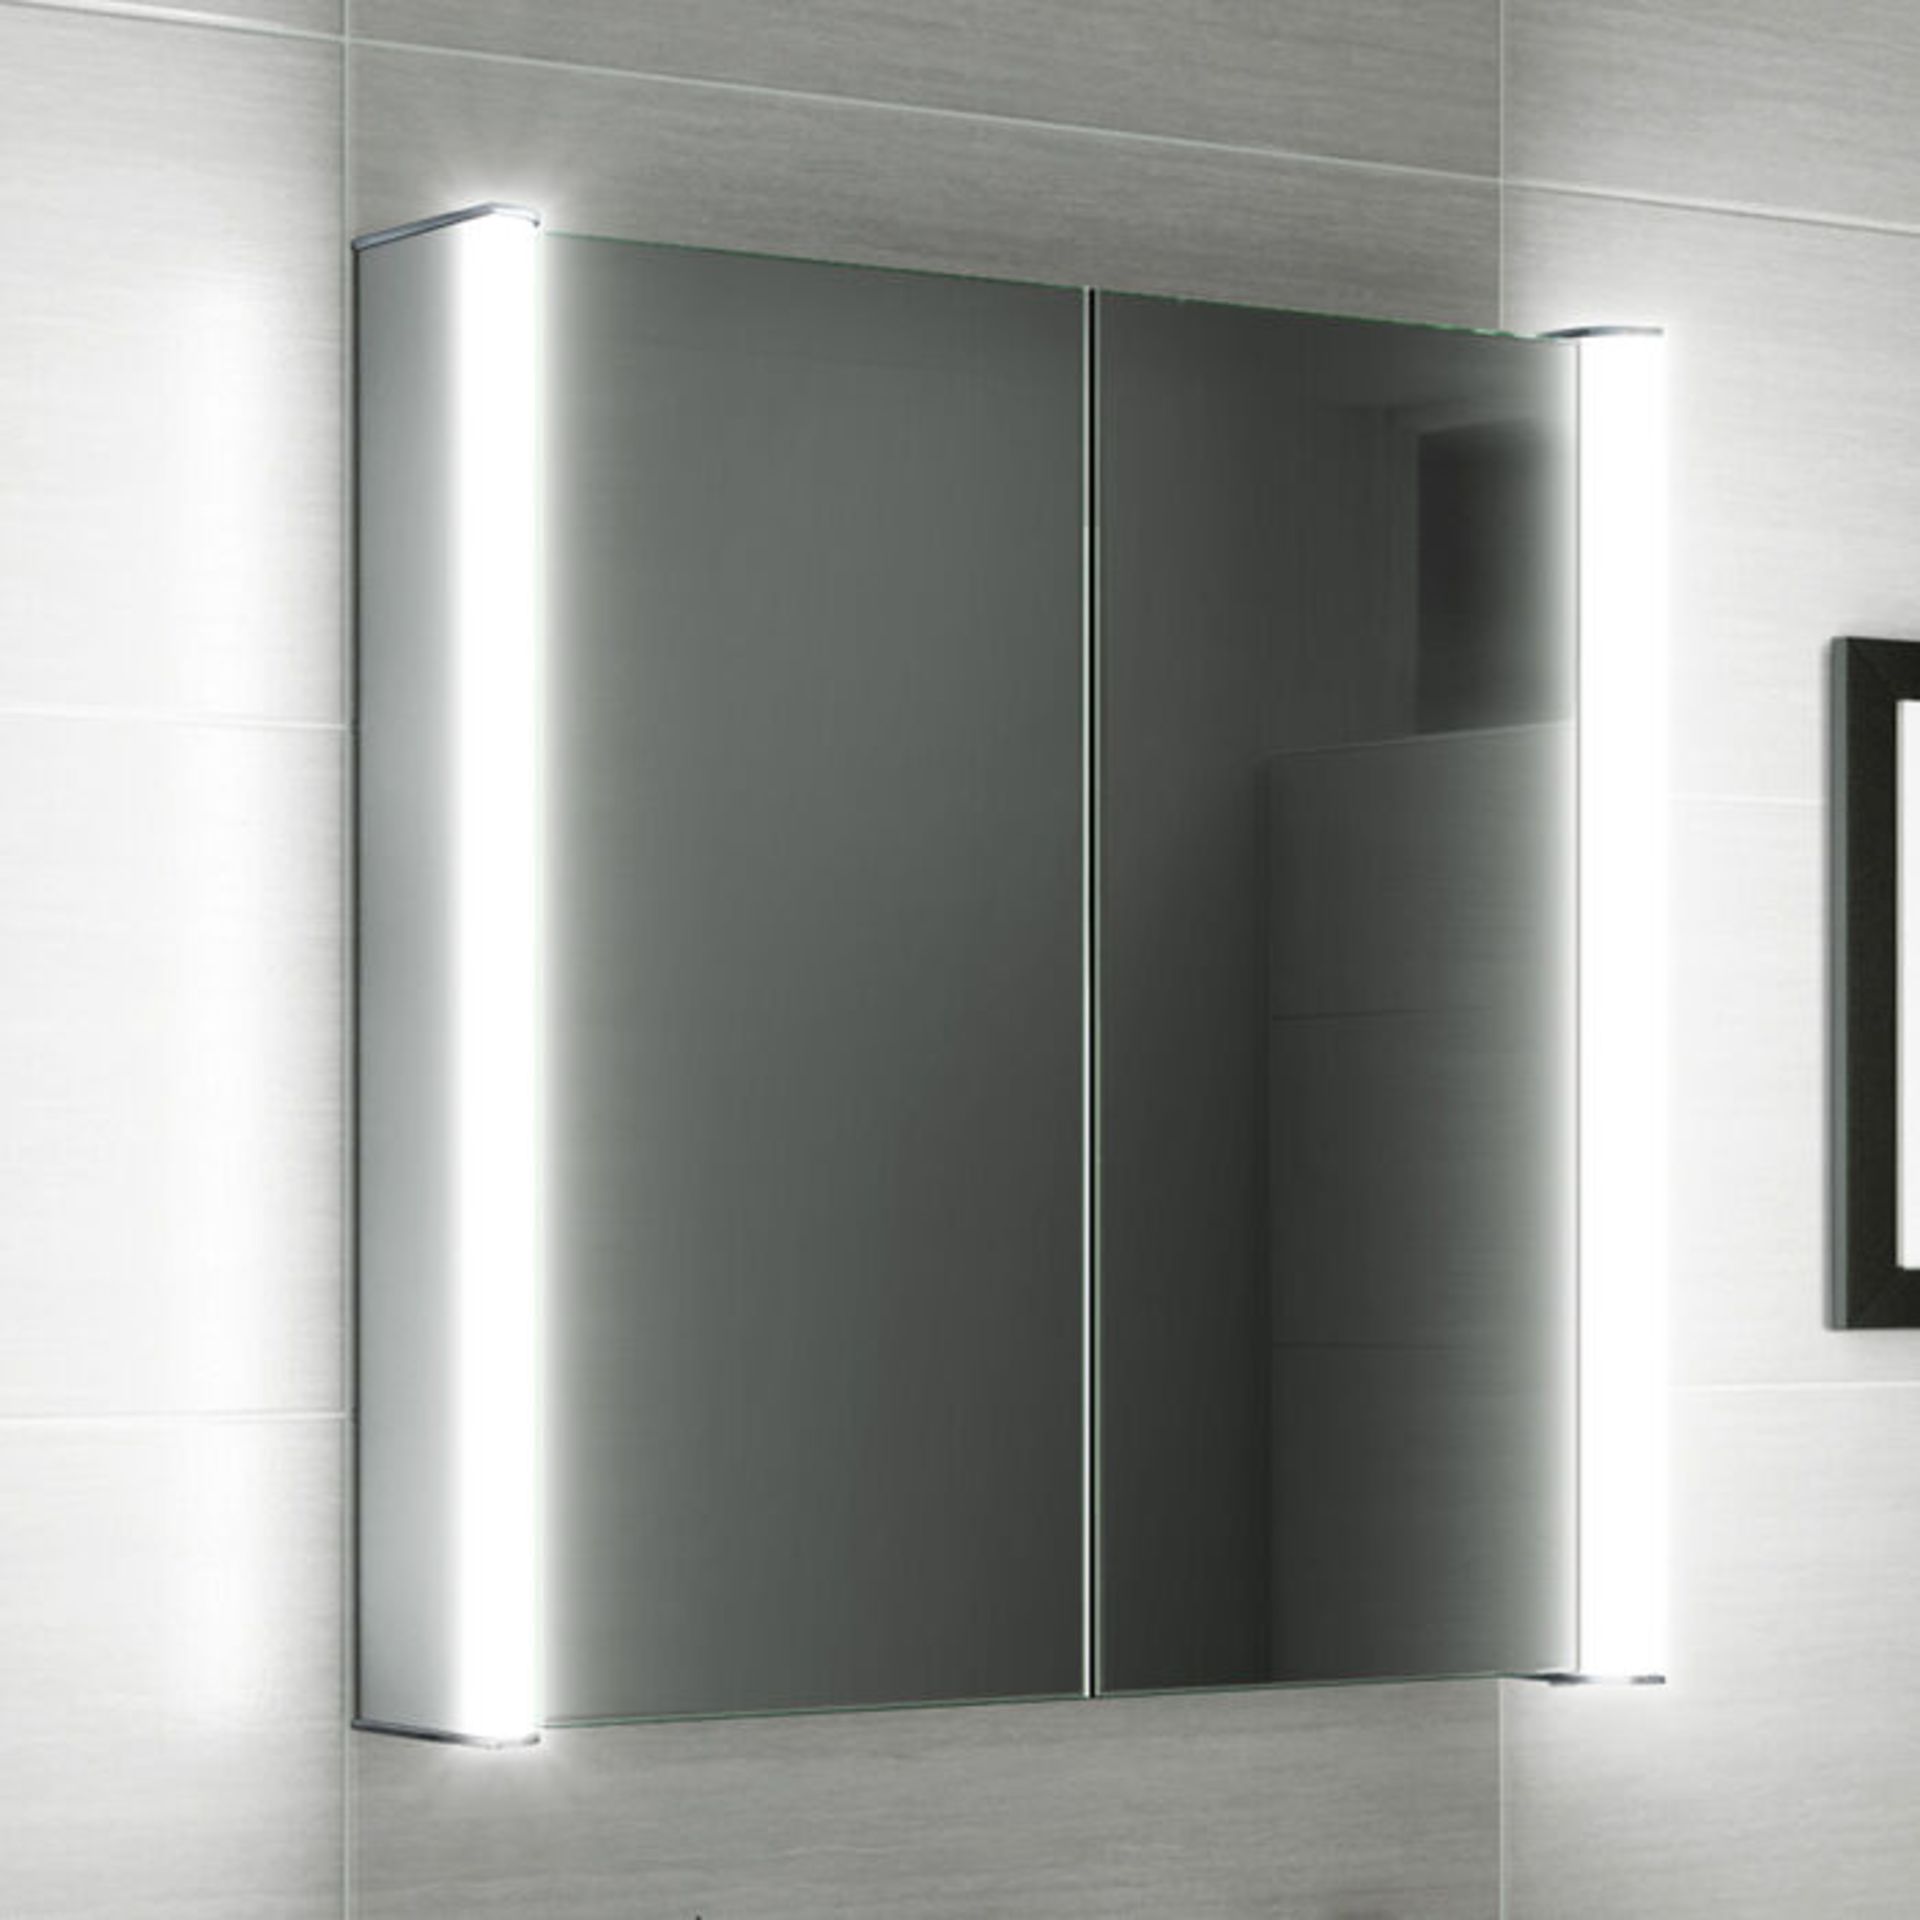 (NV6) 600x650mm Luminaire Illuminated LED Mirror Cabinet - Bluetooth Speaker & Shaver Socket. R... - Image 2 of 3